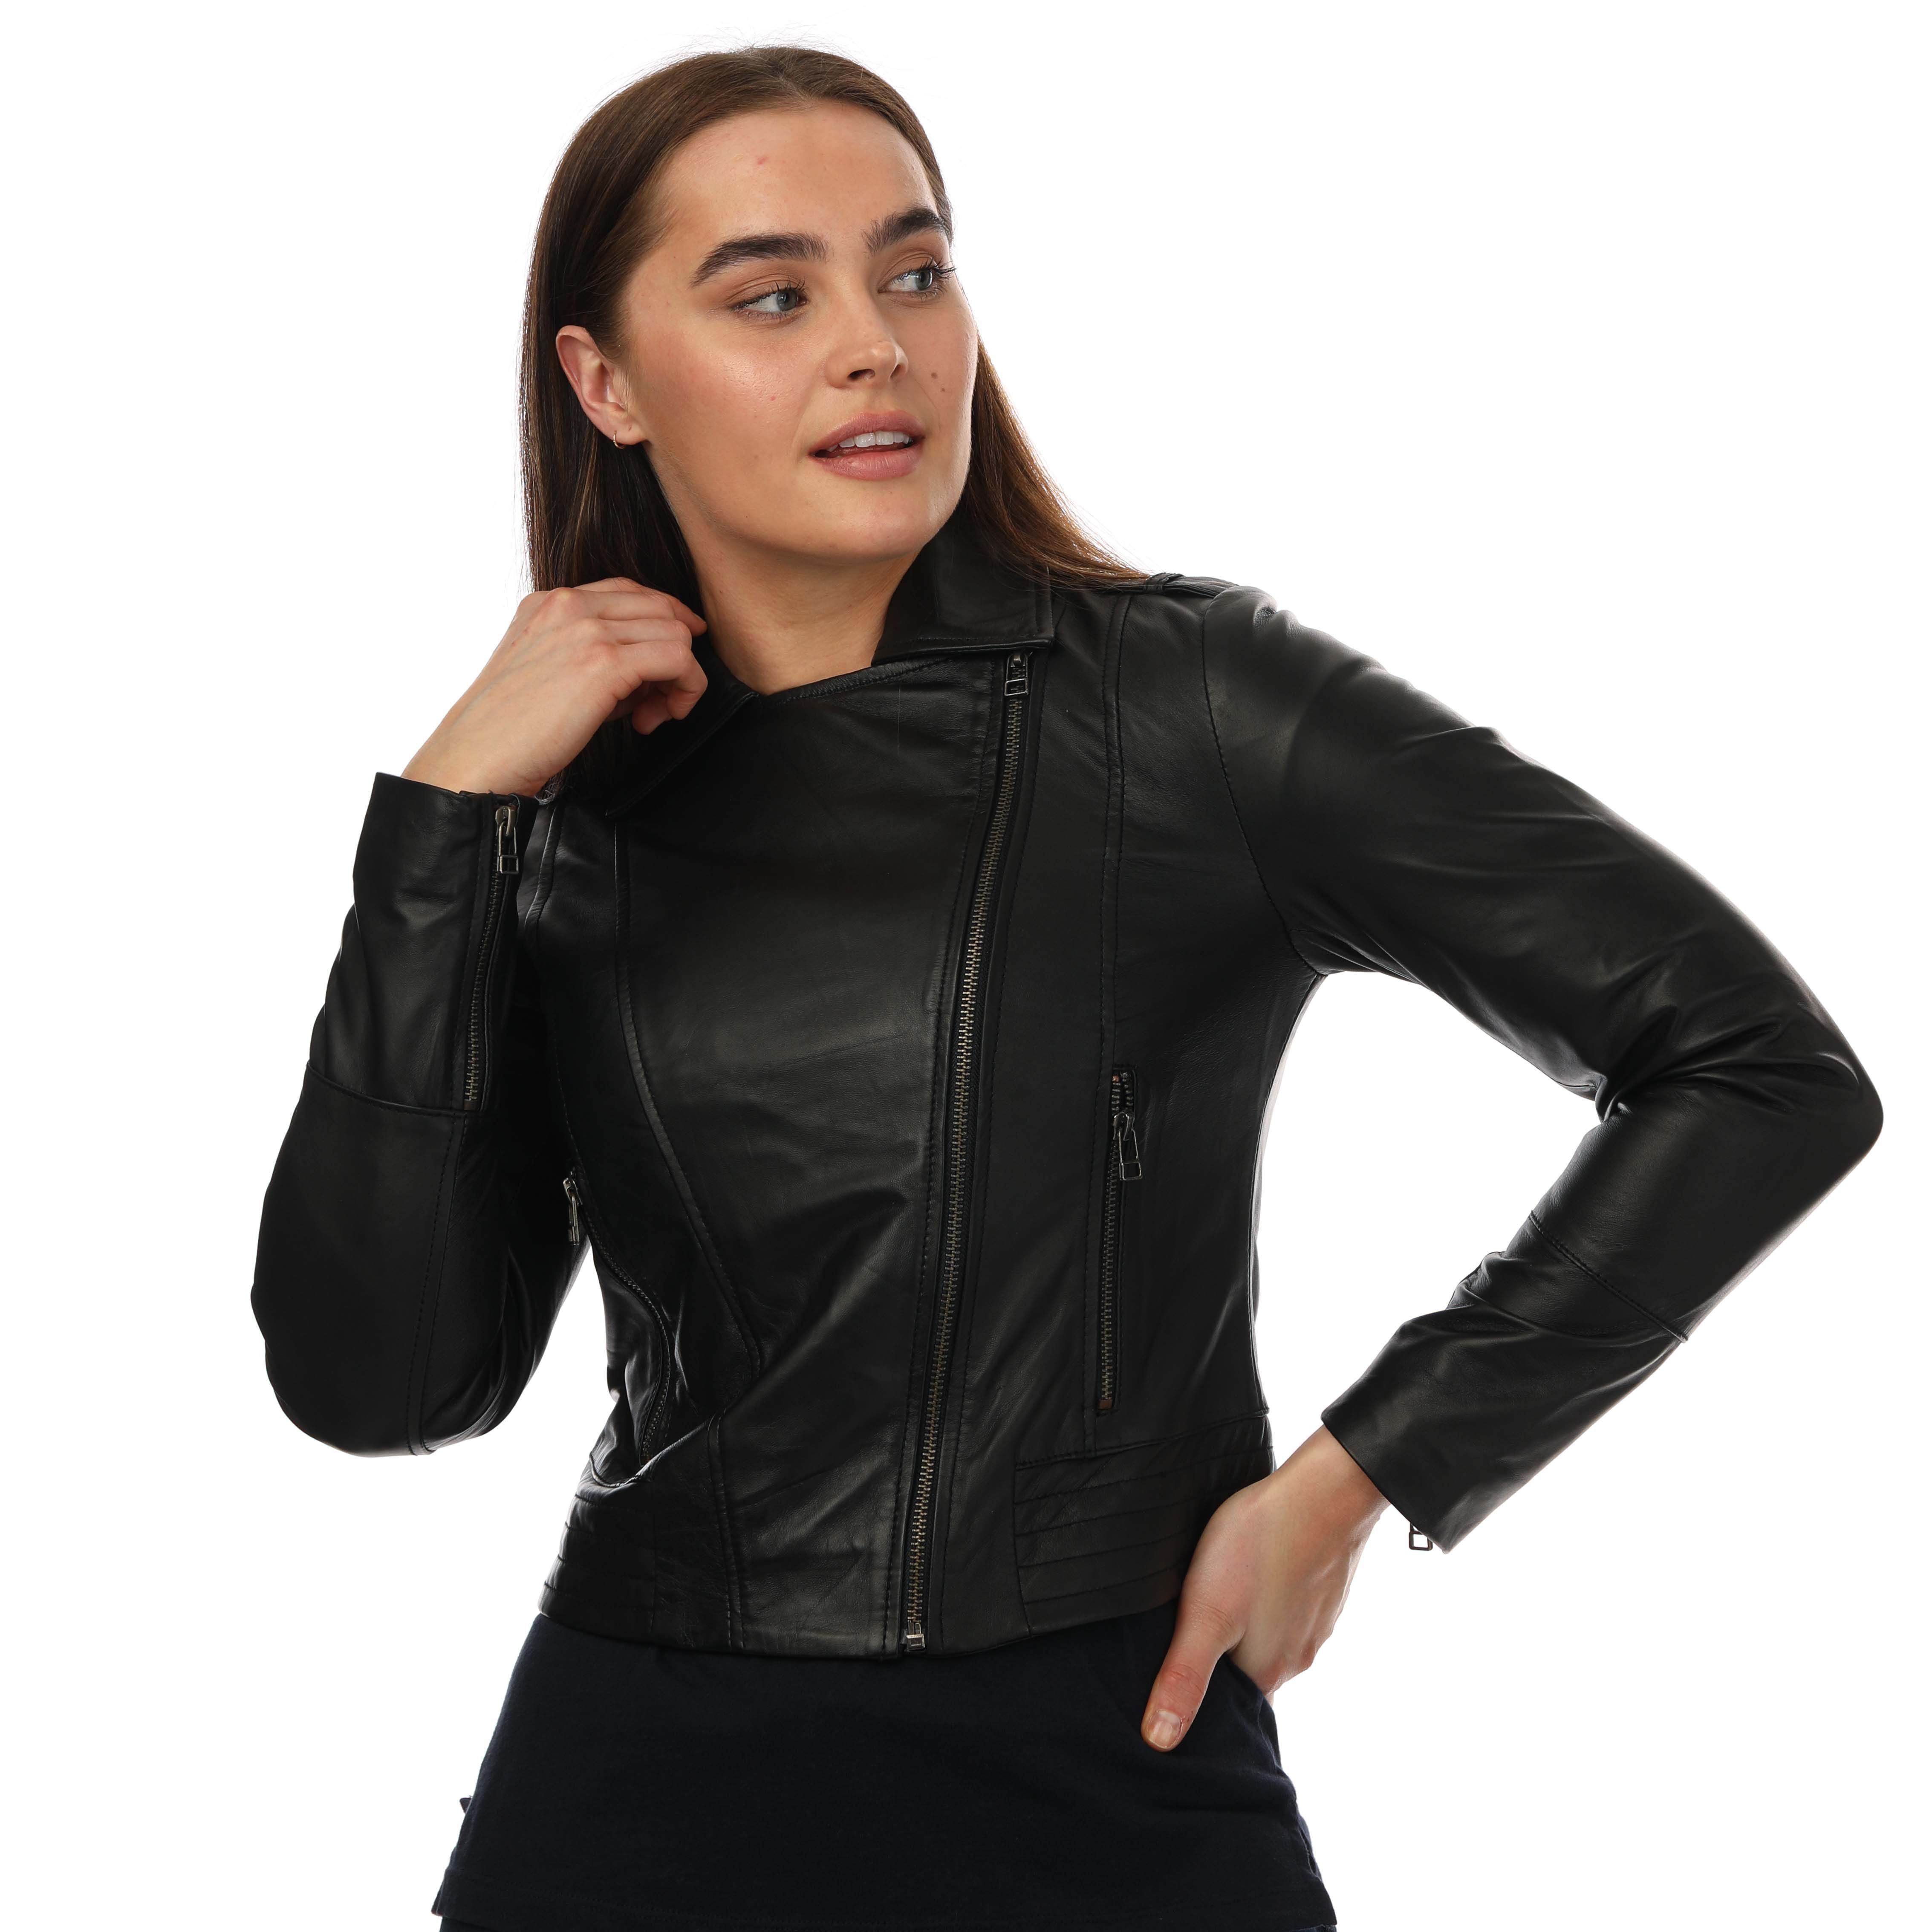 Womens Armin Leather Jacket